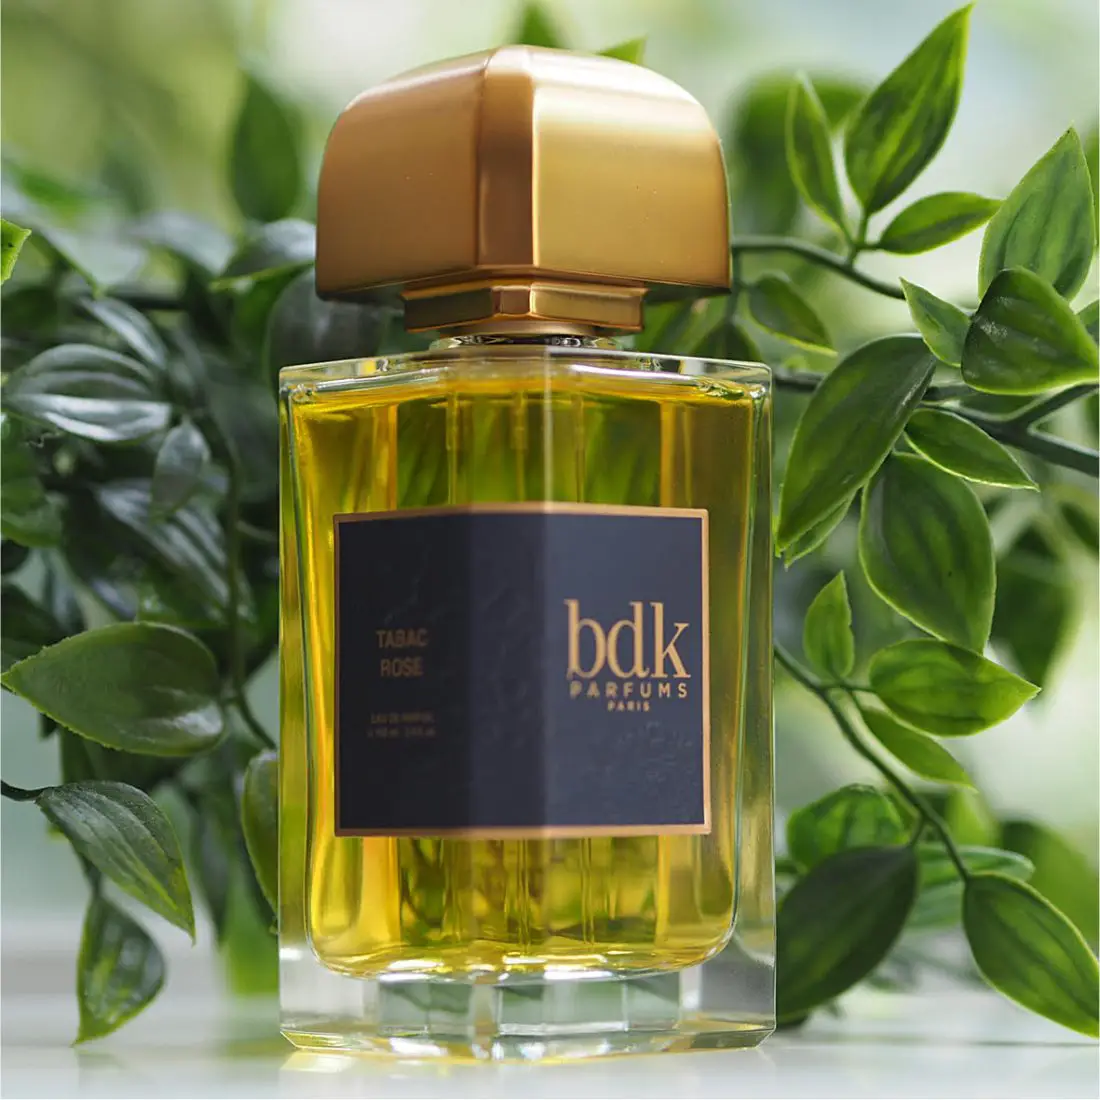 BDK Parfums | British Beauty Blogger